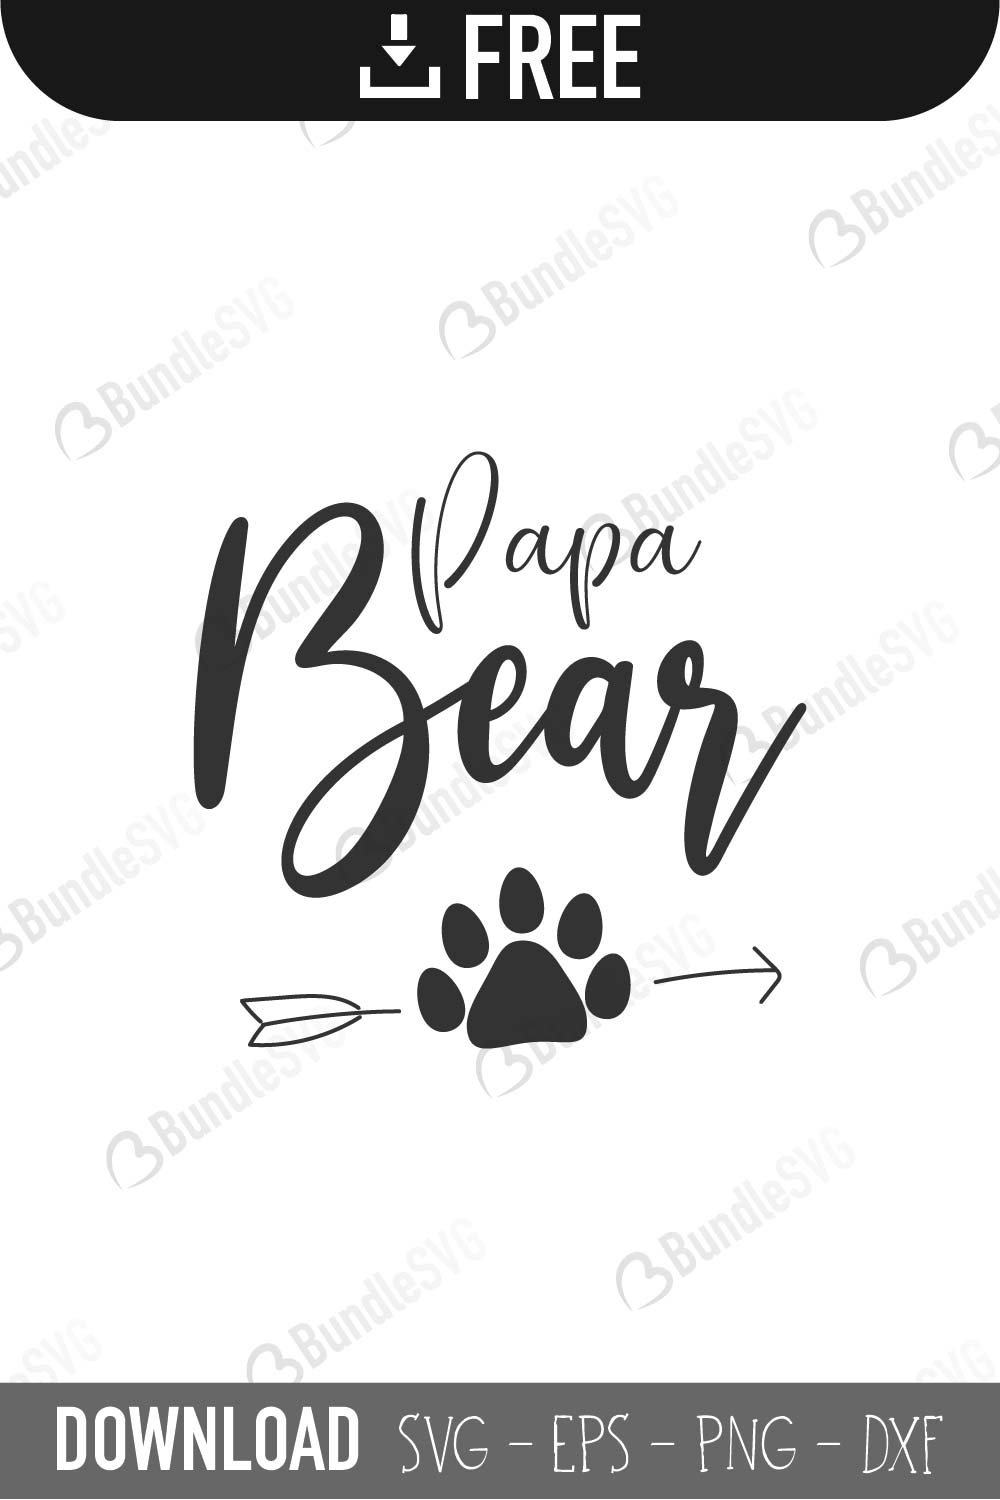 Papa Bear SVG Cut Files Free Download | BundleSVG